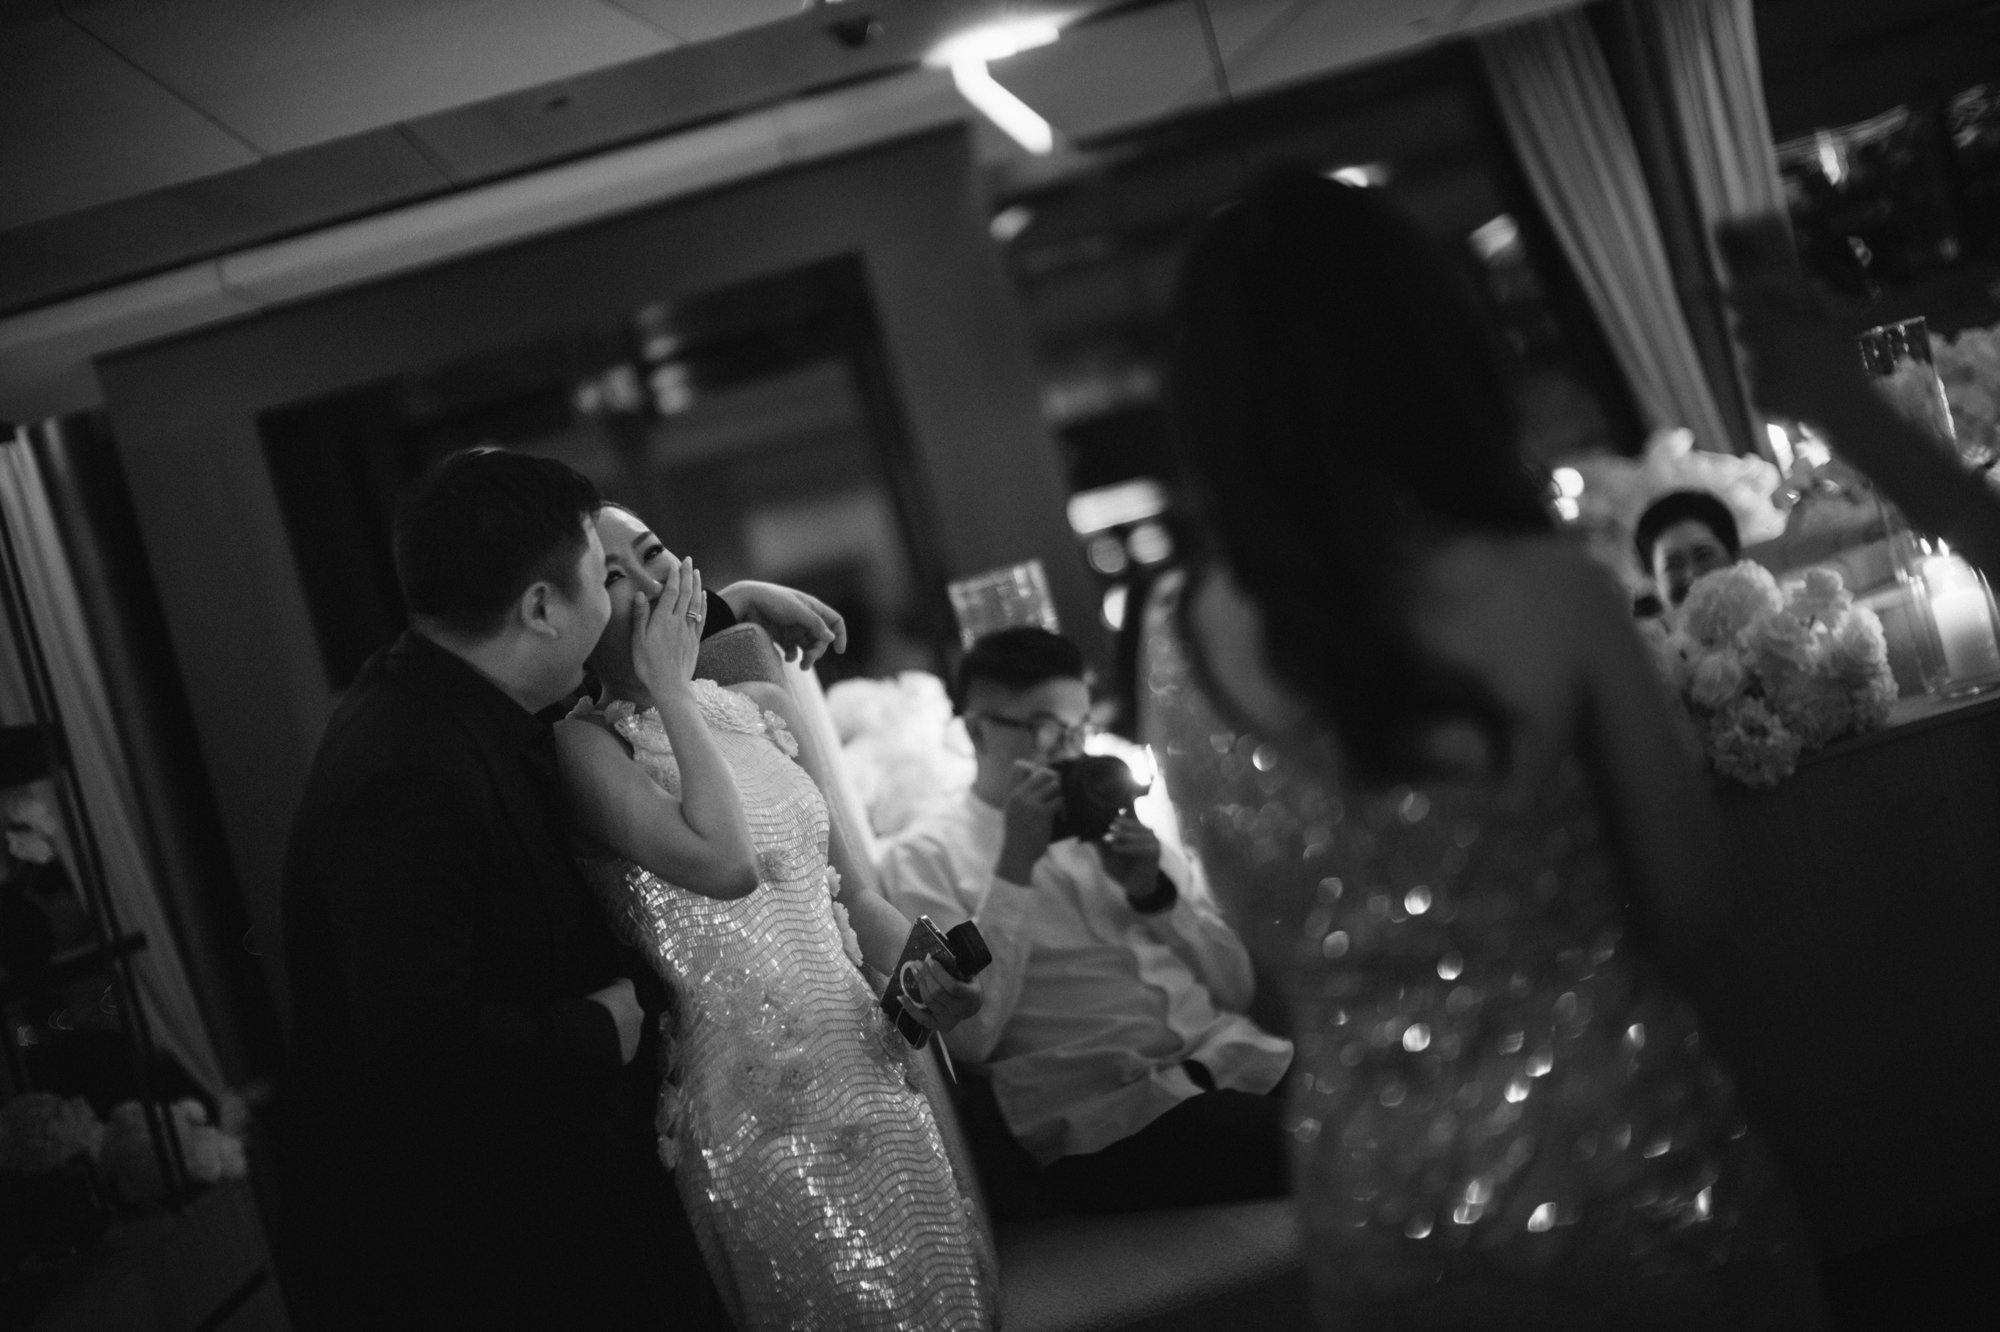 Prawira-Evelyn-Dolomites-Italy-Santre wedding-Yefta Gunawan-Jeriko MUA-Carol Kuntjoro Photography-128.jpg